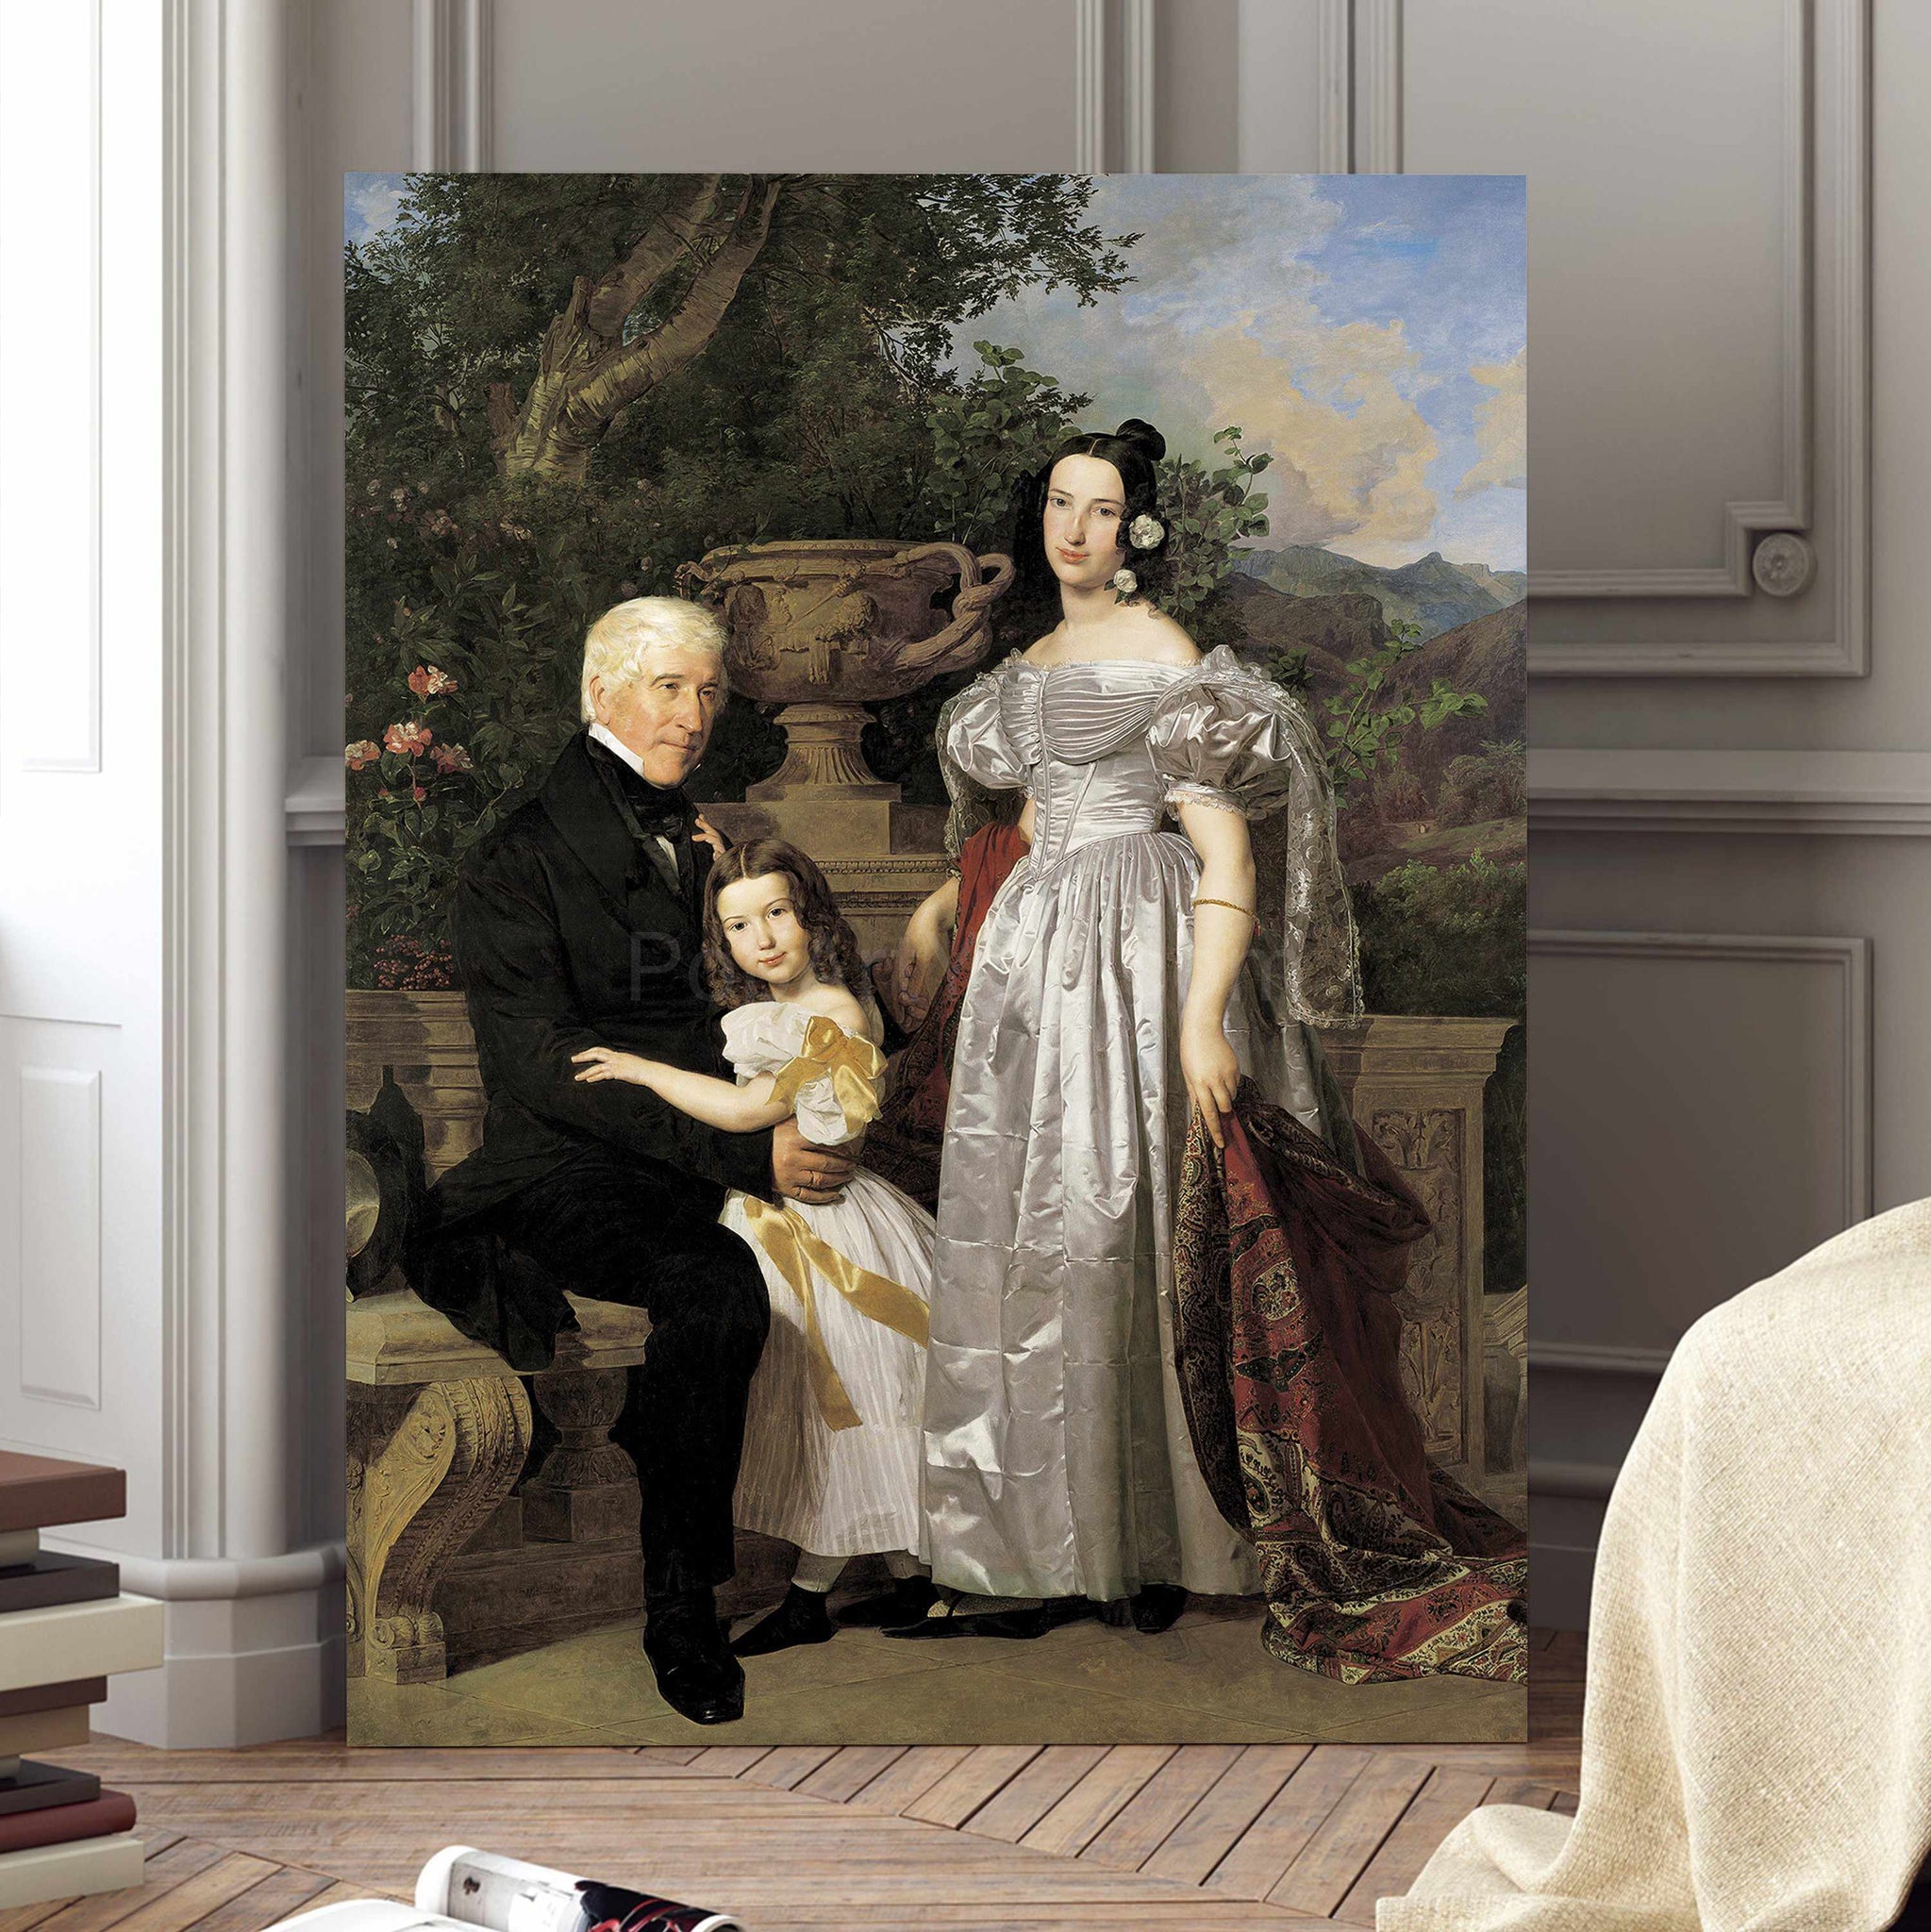 Create a Personalized Family Portrait Illustration - Revellia